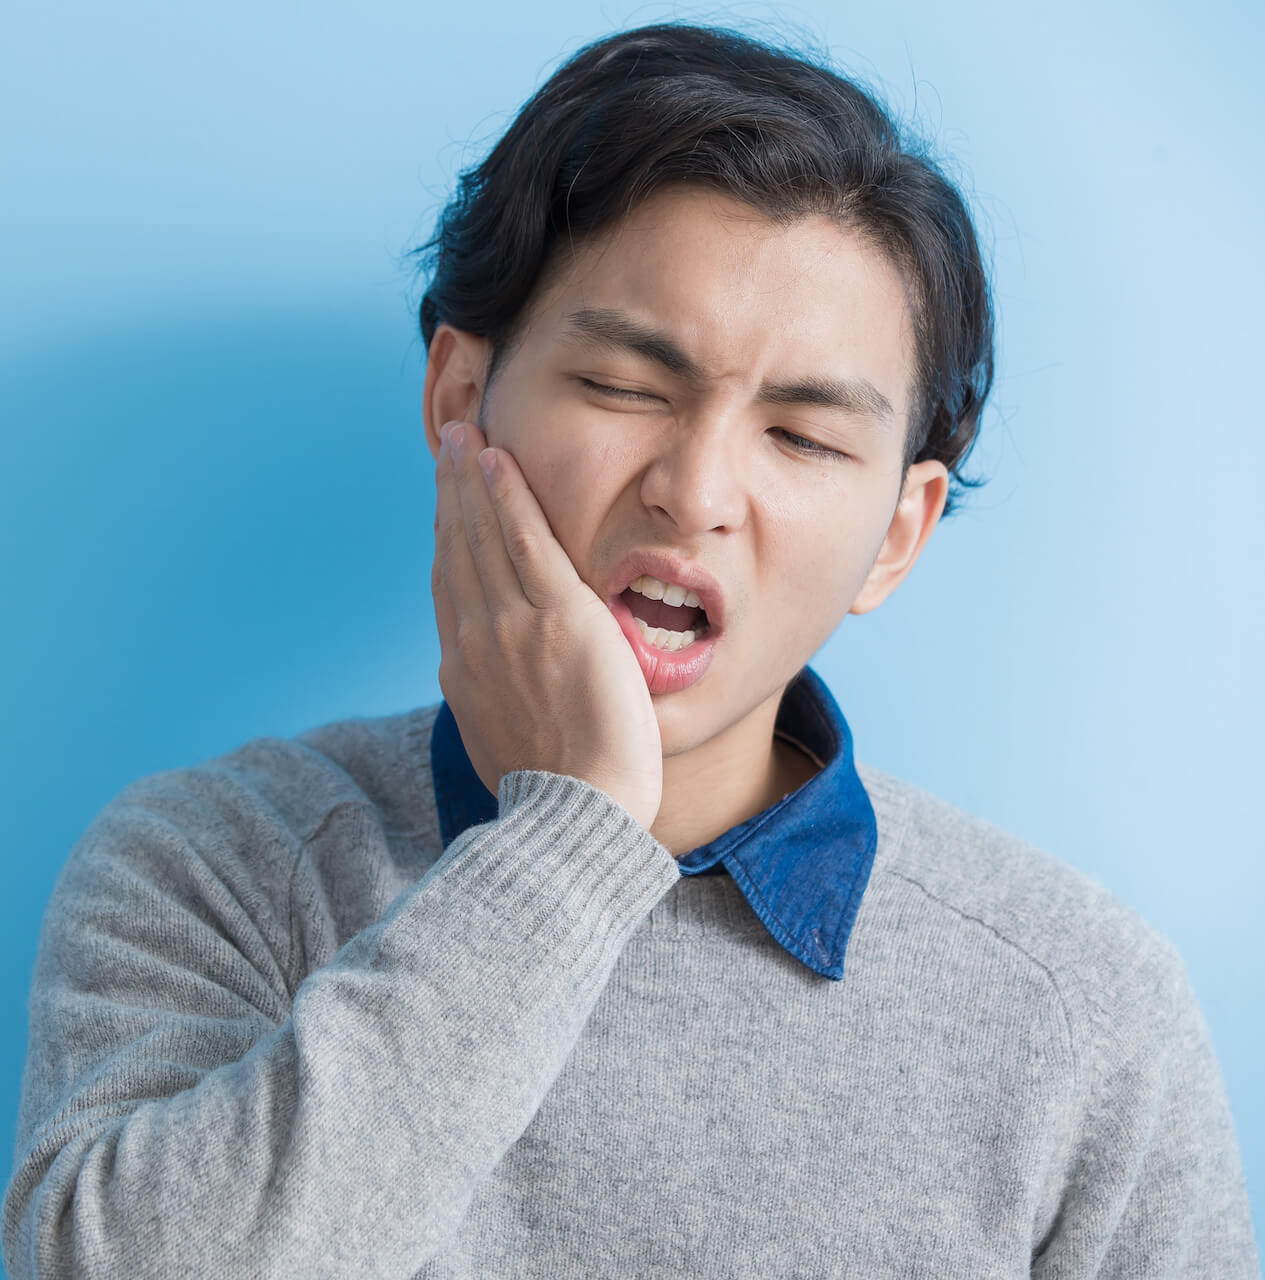 Sensitive teeth problem during winter.